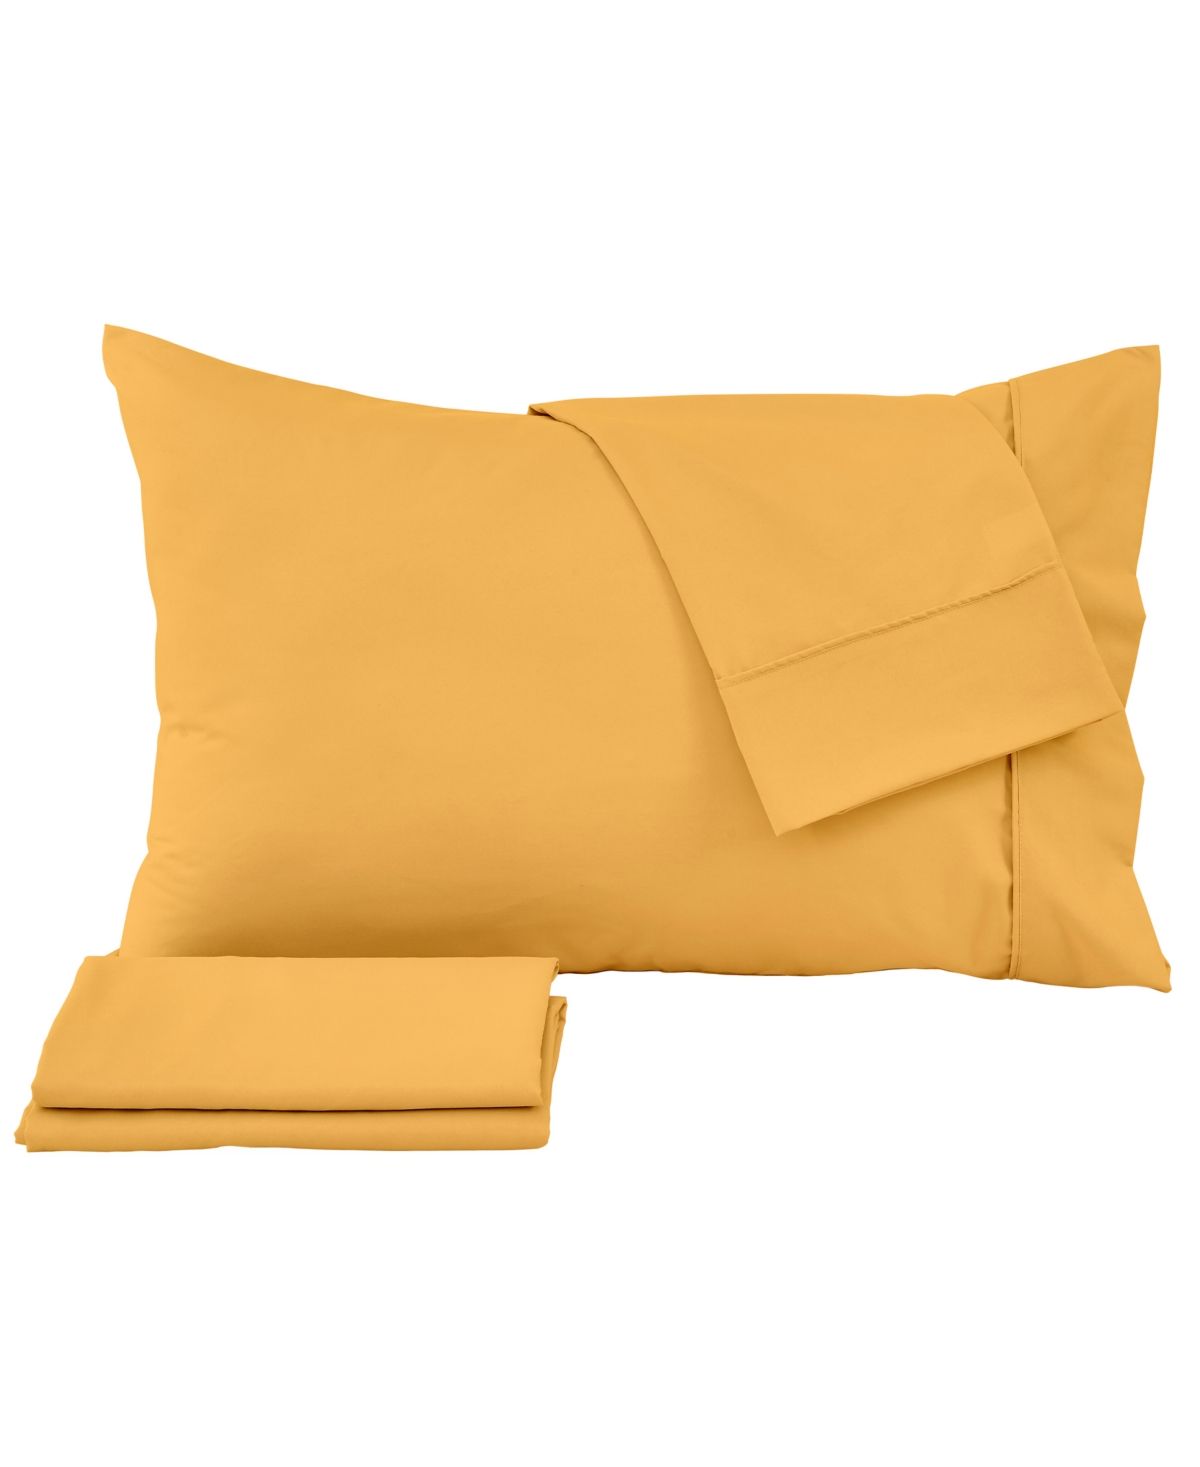 Premium Comforts Solid Microfiber Ultra Soft 4 Piece Sheet Set, Queen In Ginger